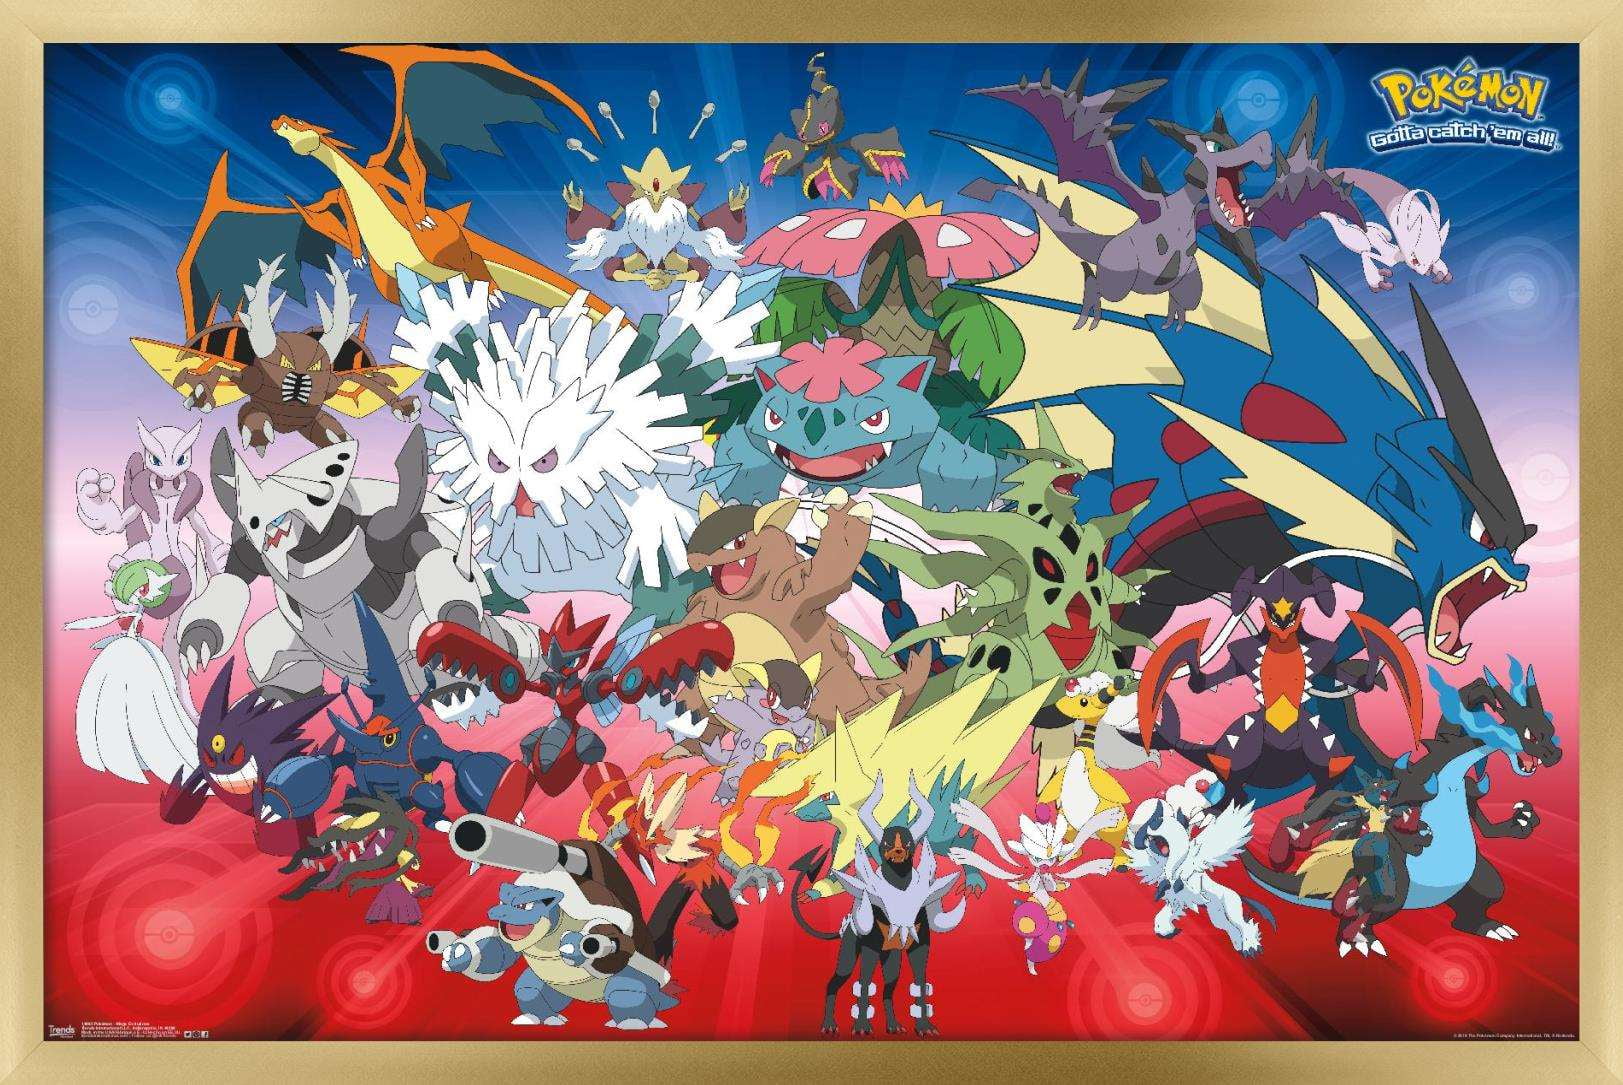 Mega Pokedex Poster Pokemon Digital Art Print 